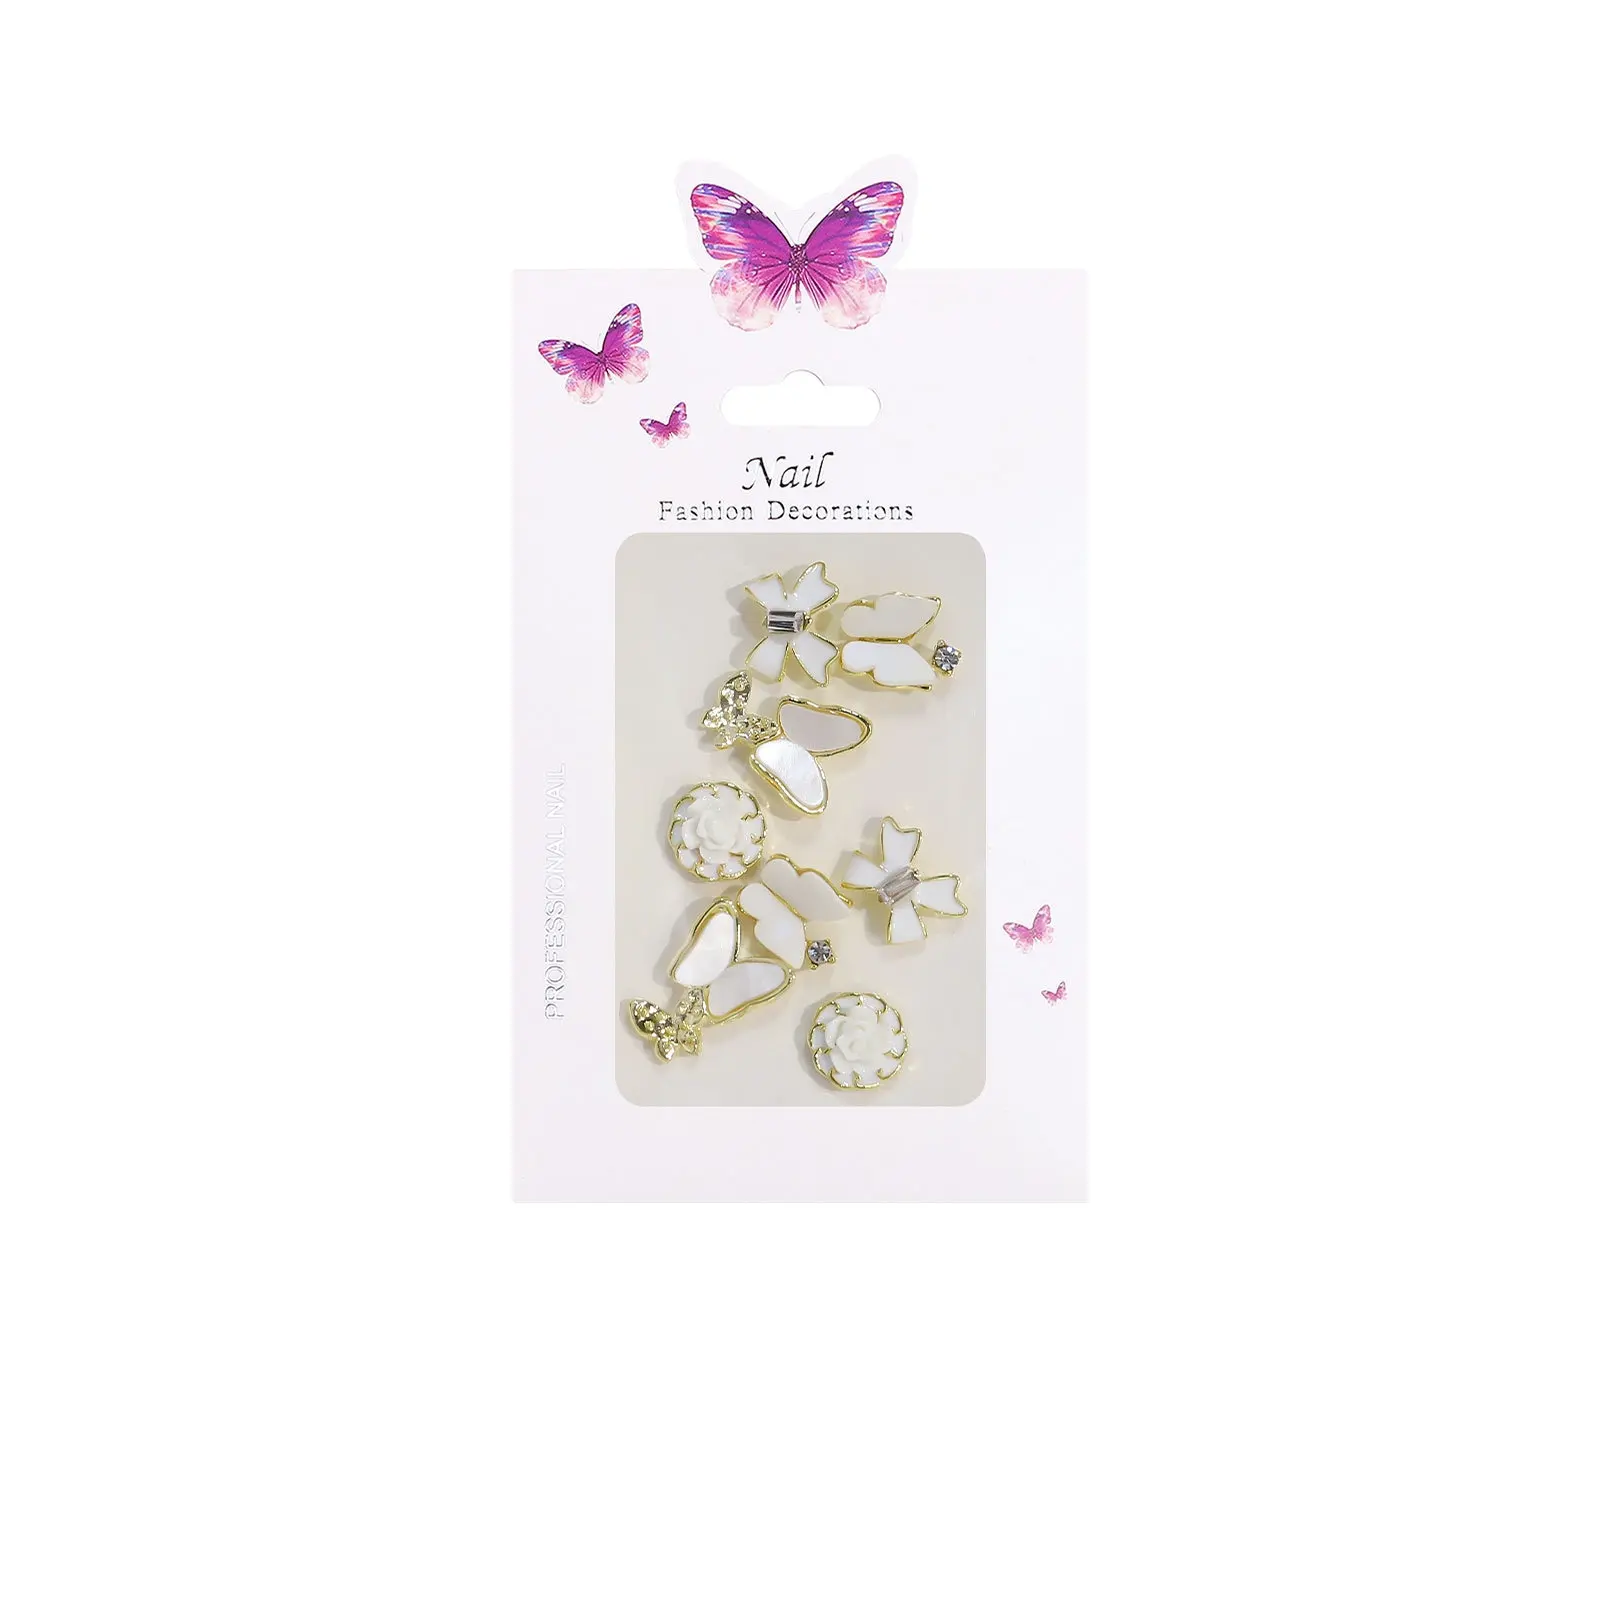 adiyat 3d kawaii japanese style accessories metal alloy butterfly heart bow chain bear charms nail ornaments art decorations